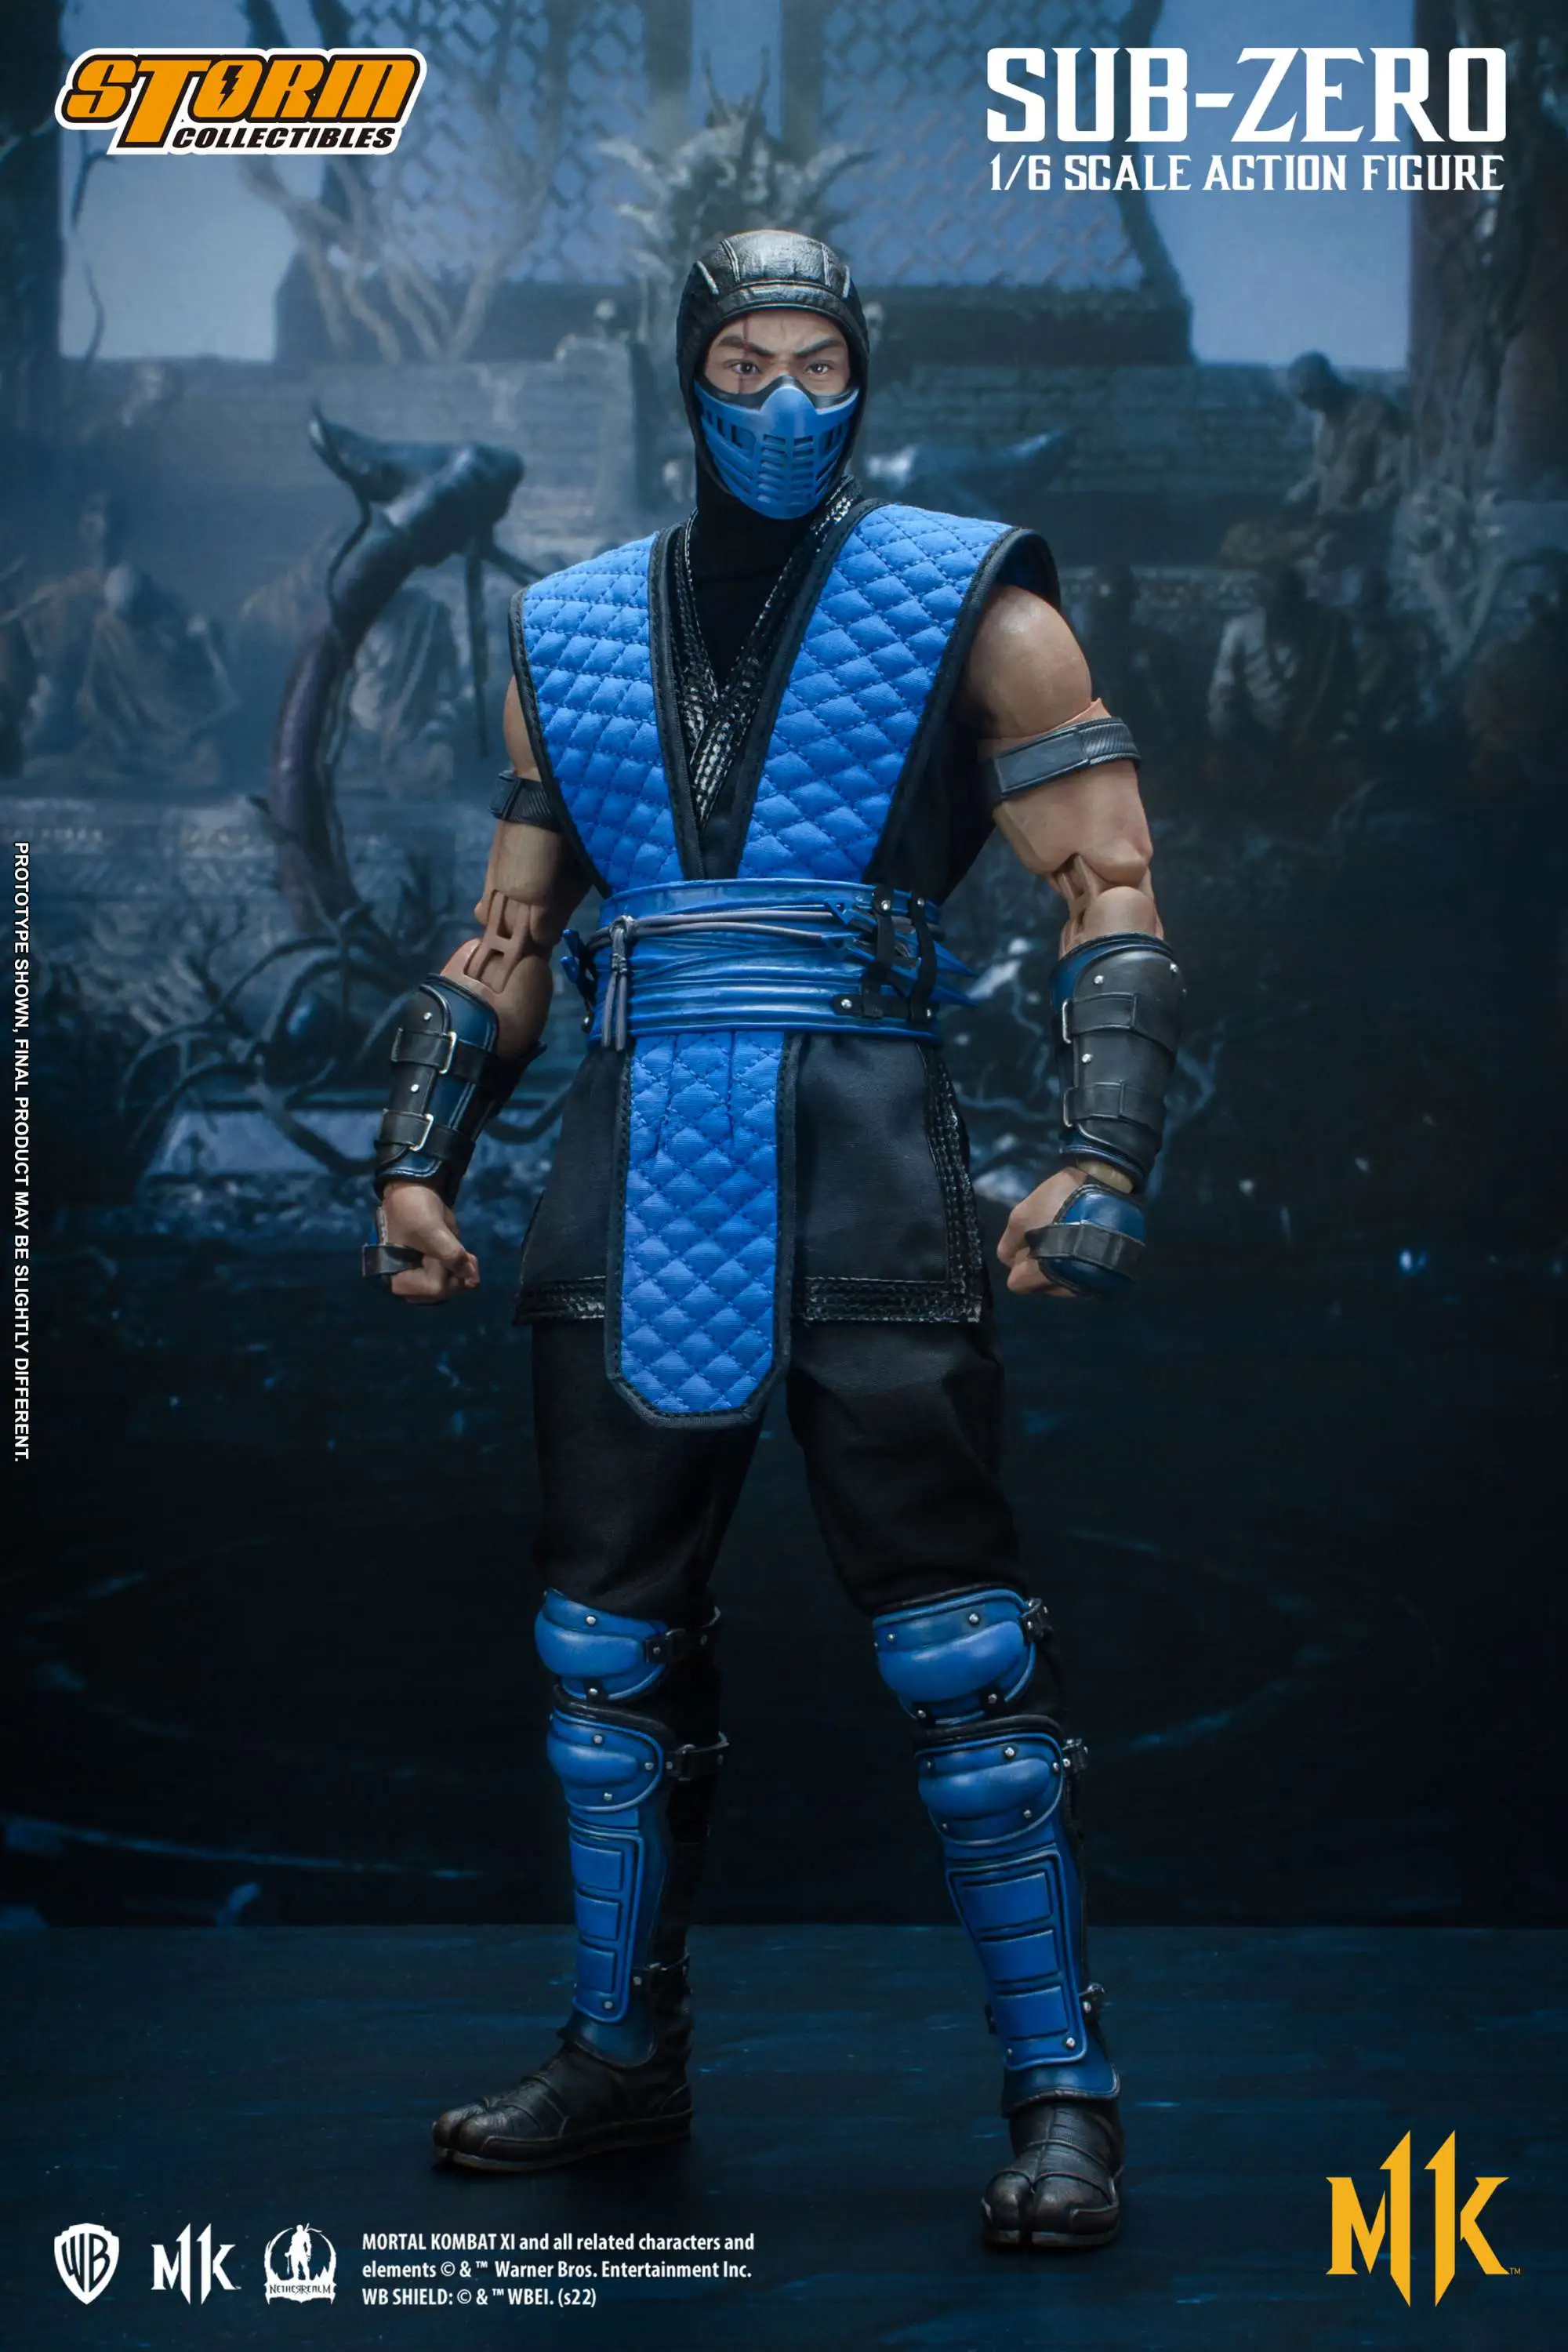 Shao Kahn Mortal Kombat Action Figure 1/12 18 cm – poptoys.it